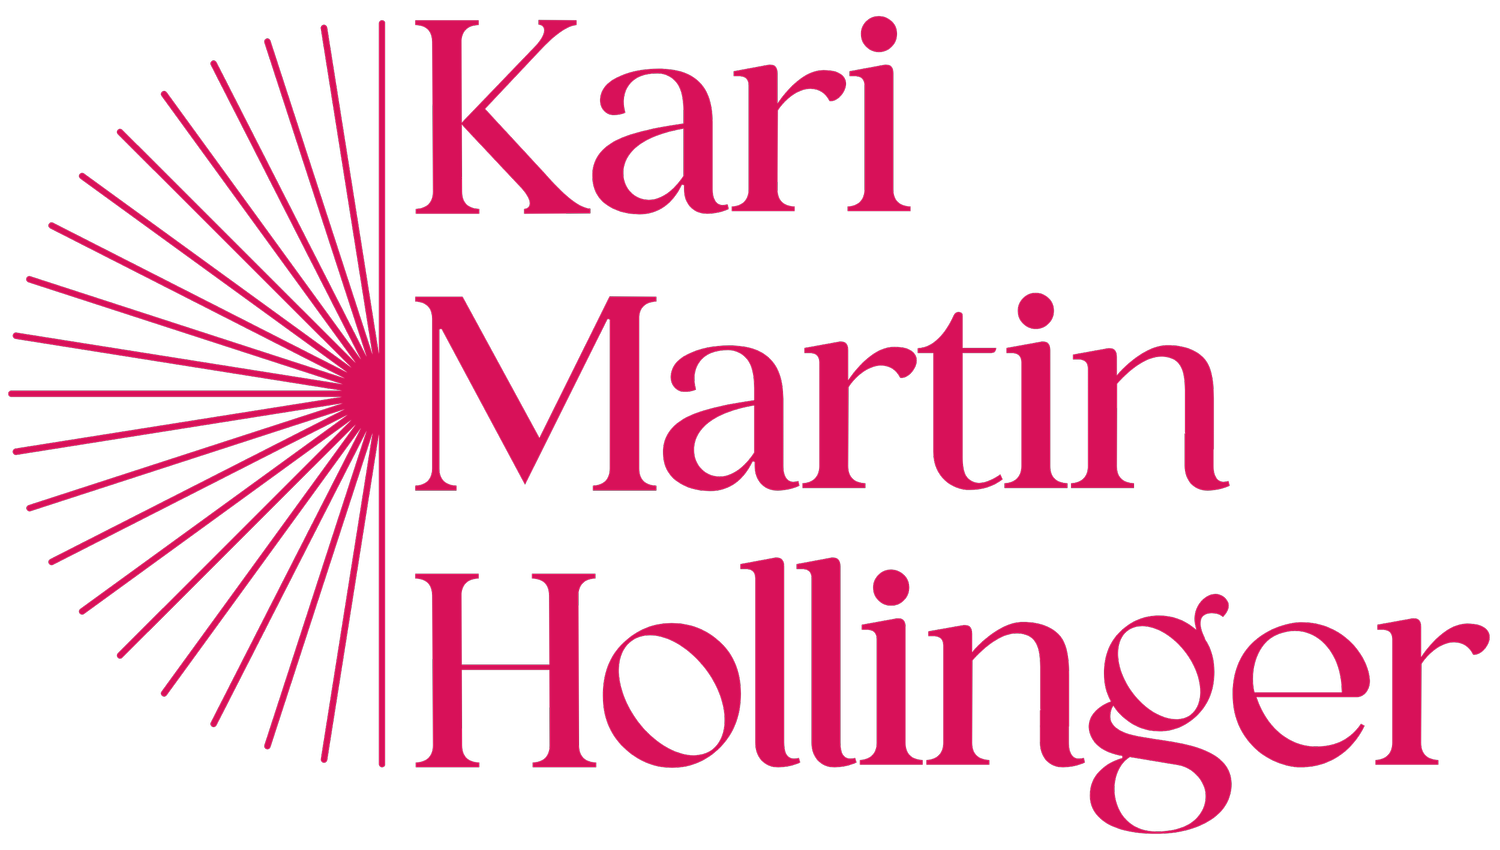 Kari Martin Hollinger